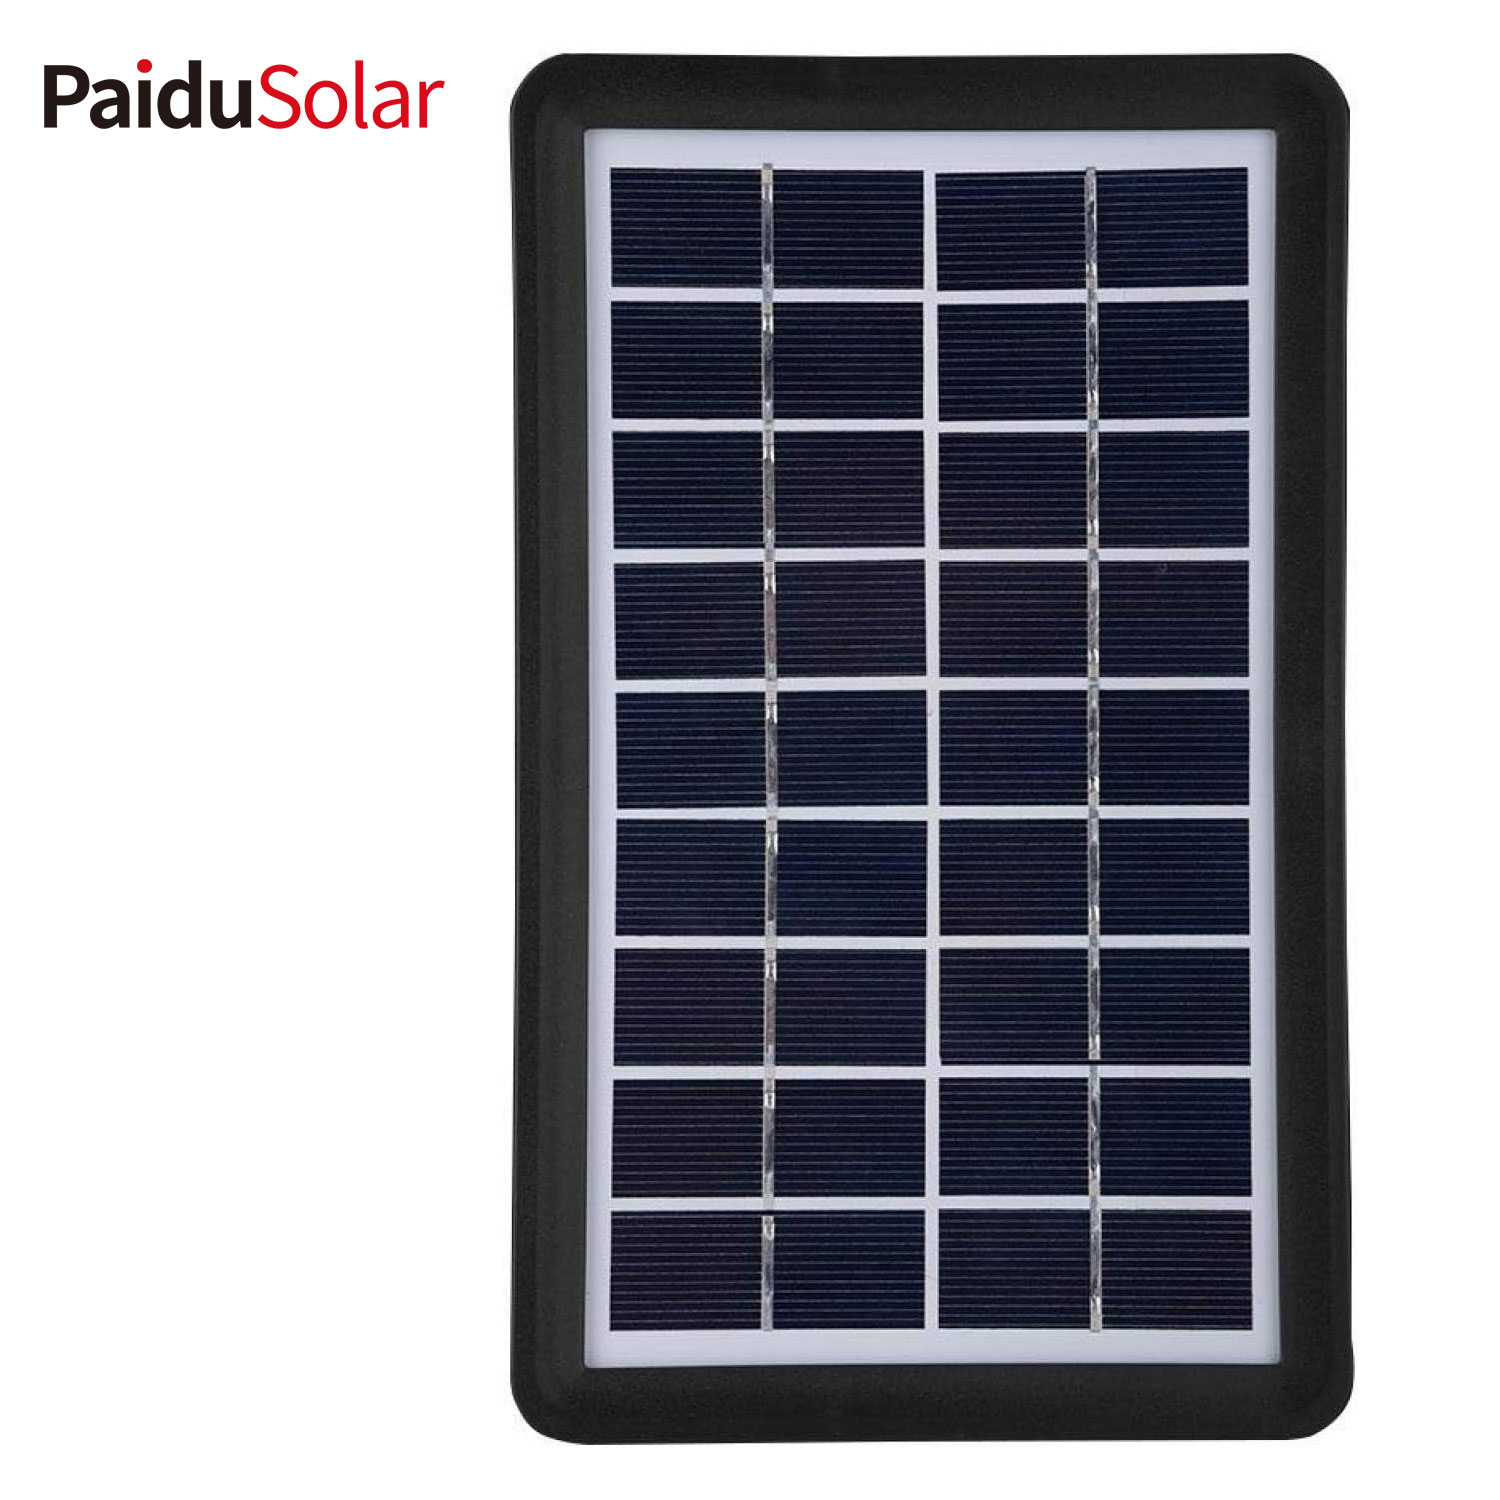 PaiduSolar 9V 3W バッテリー充電ボート用ポリシリコンソーラーパネル太陽電池